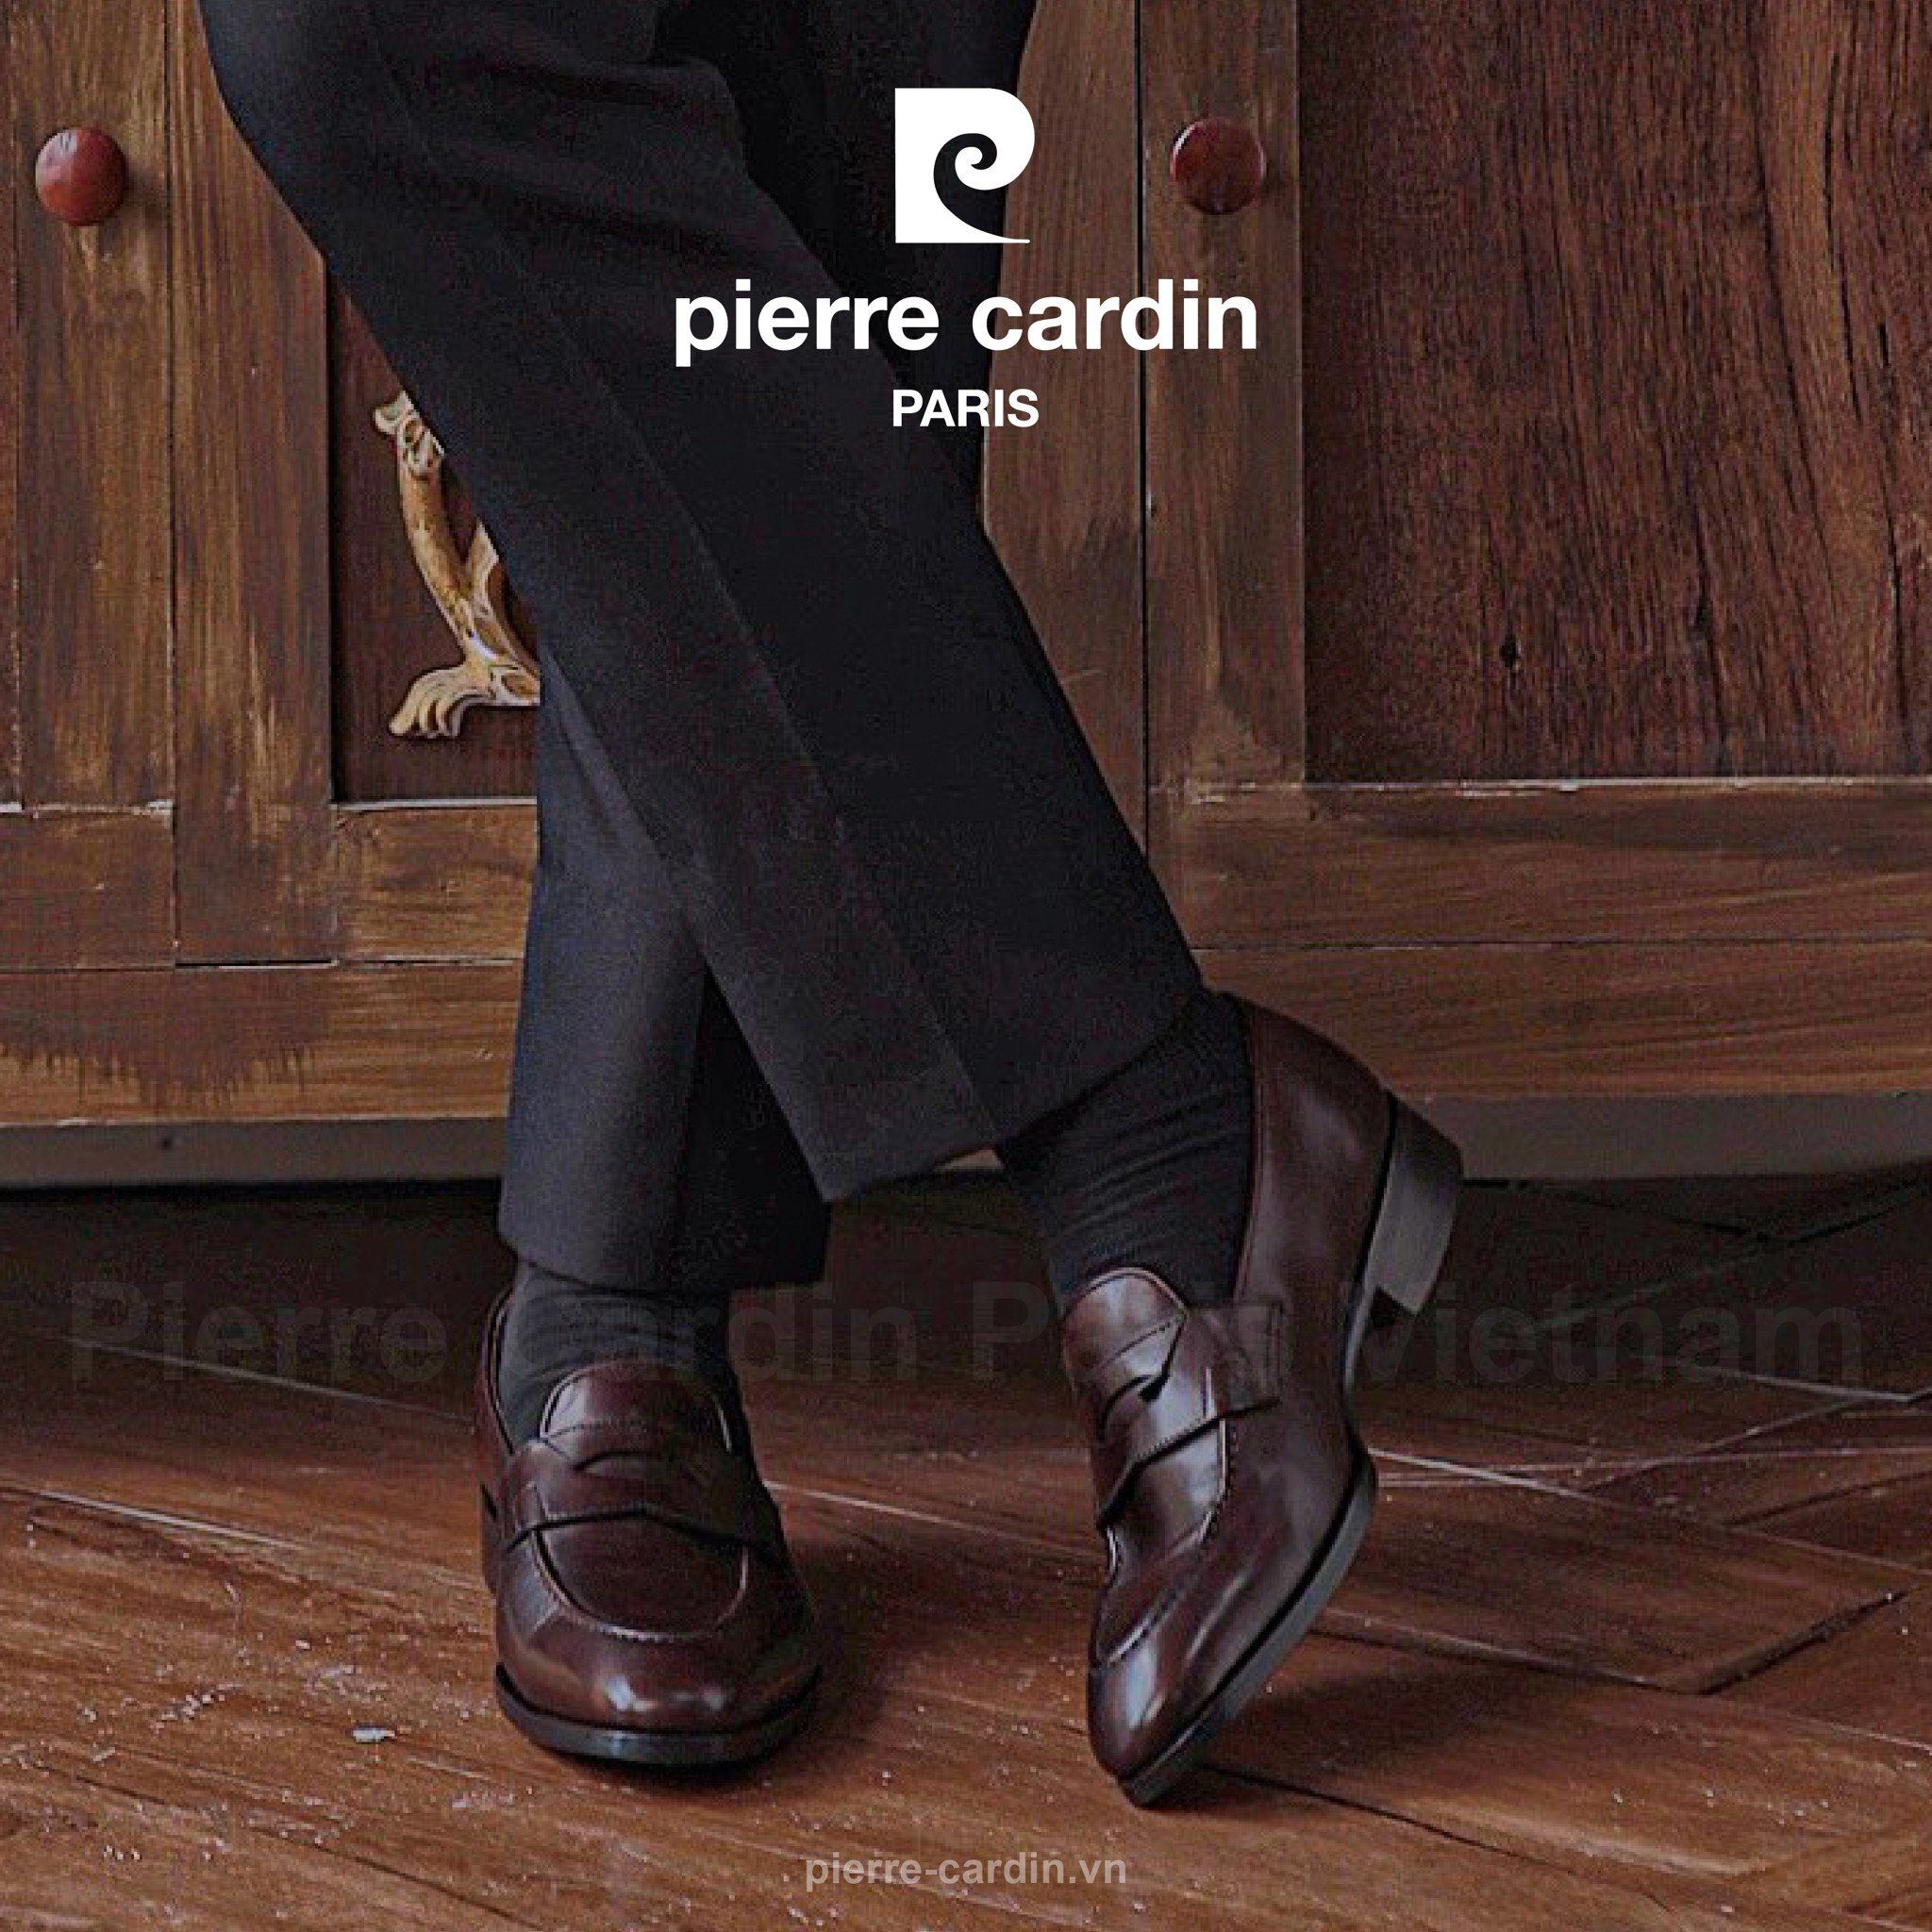 Pierre Cadin Paris Vietnam: Giày Penny Loafer Đế Da Pierre Cardin - PCMFWLH 361 (Da Bò Ý)